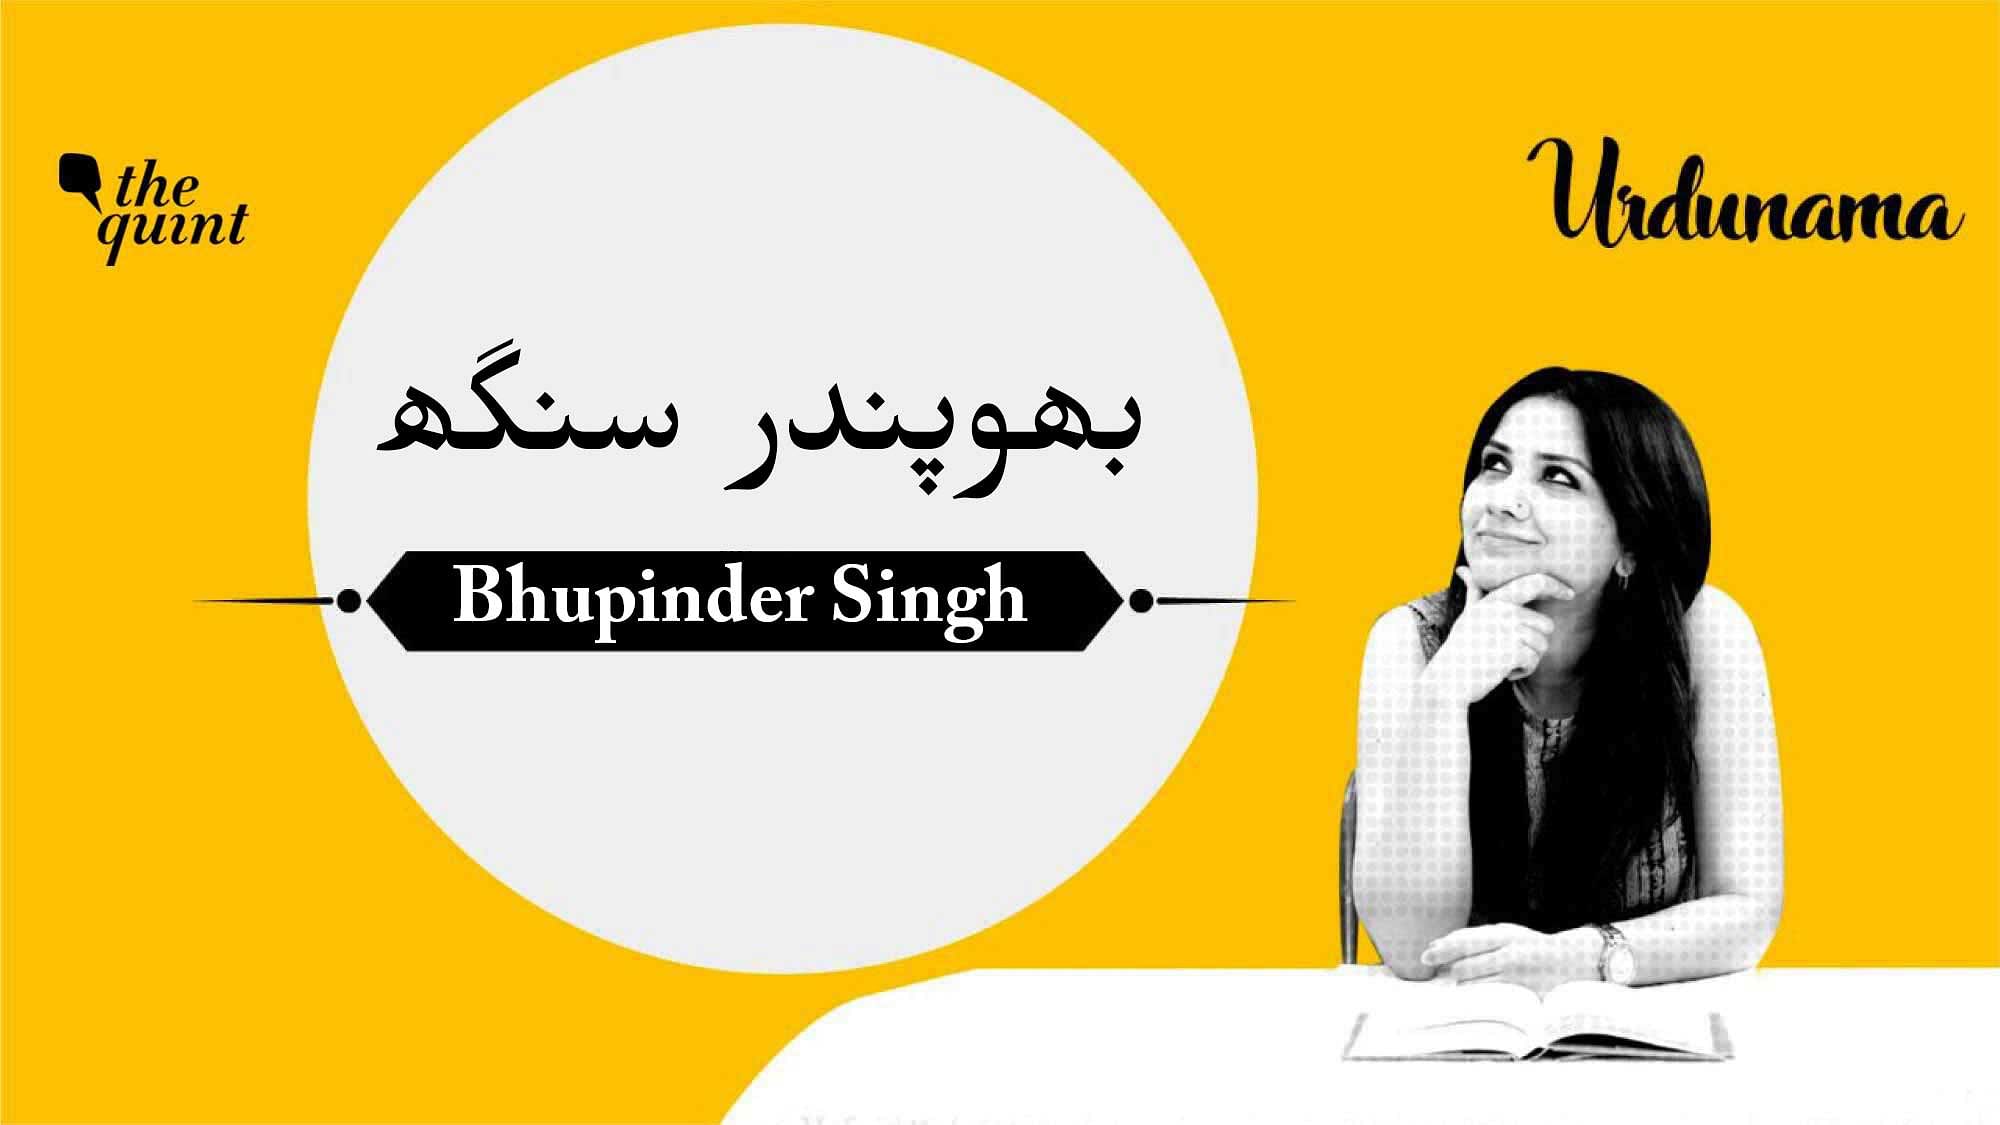 <div class="paragraphs"><p>Urdunama episode on Bhupinder Singh's timeless melodies.&nbsp;</p></div>